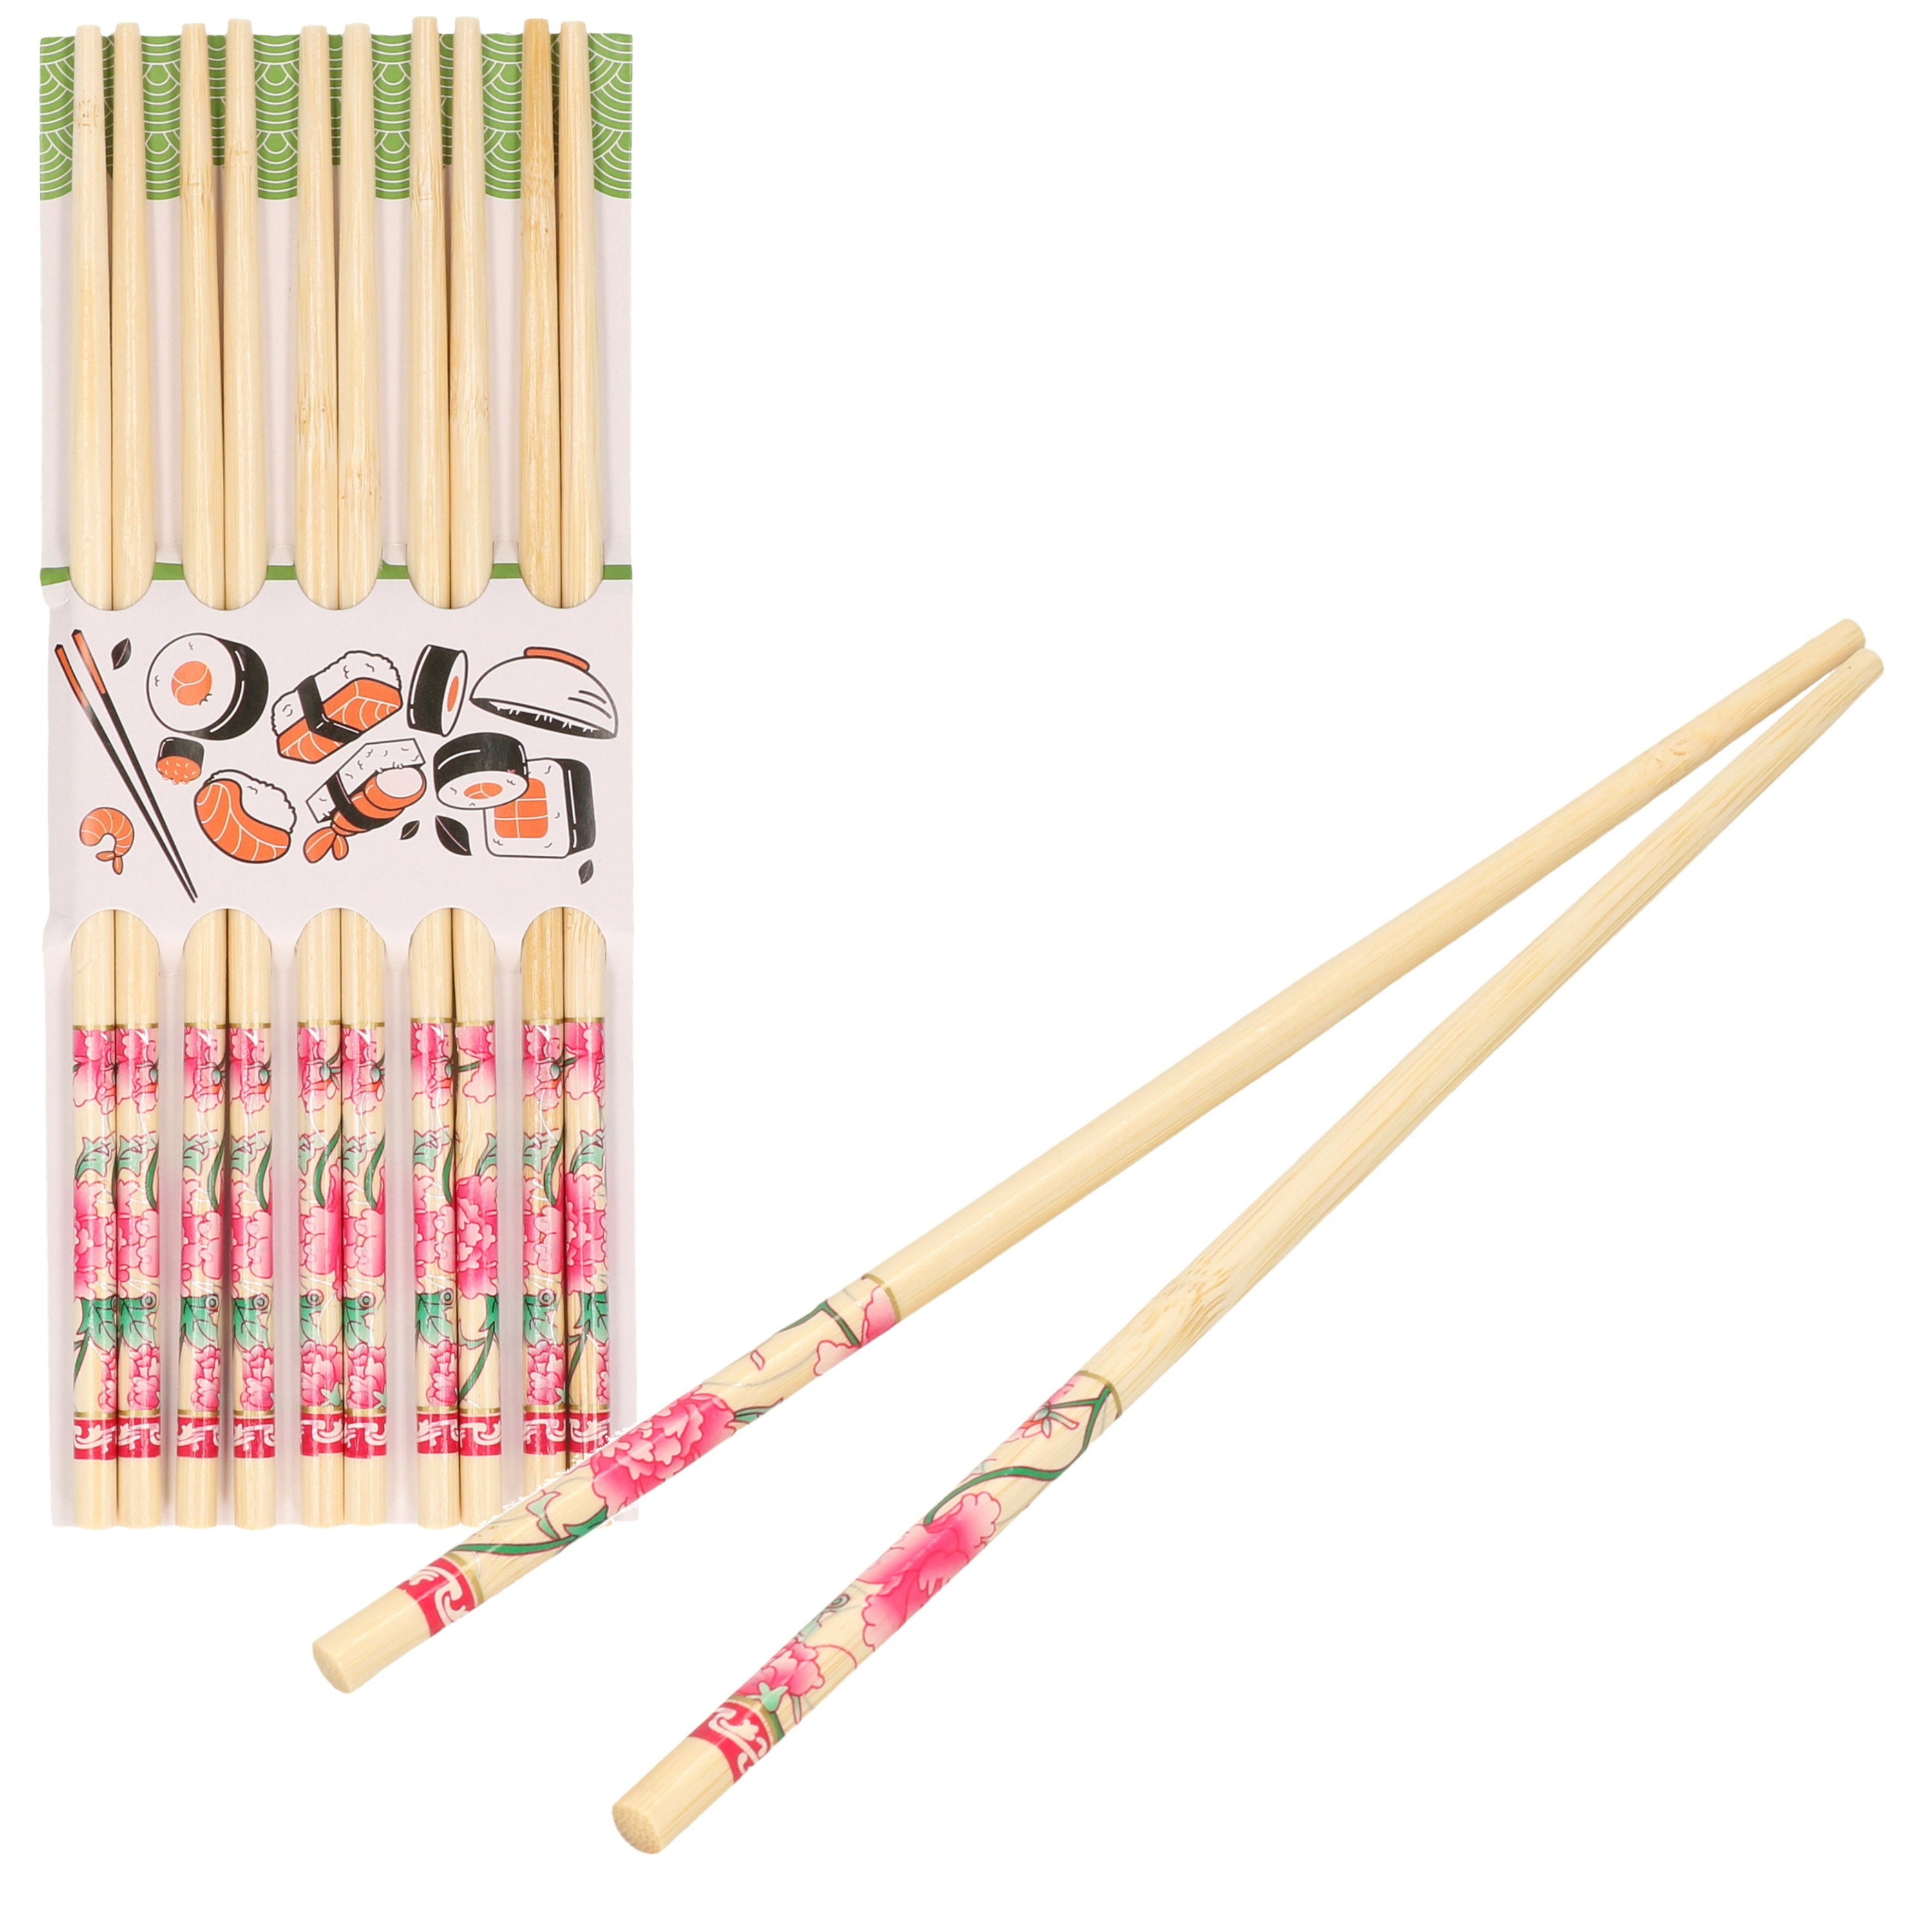 Sushi eetstokjes 5x setjes bamboe hout roze bloemen print 24 cm